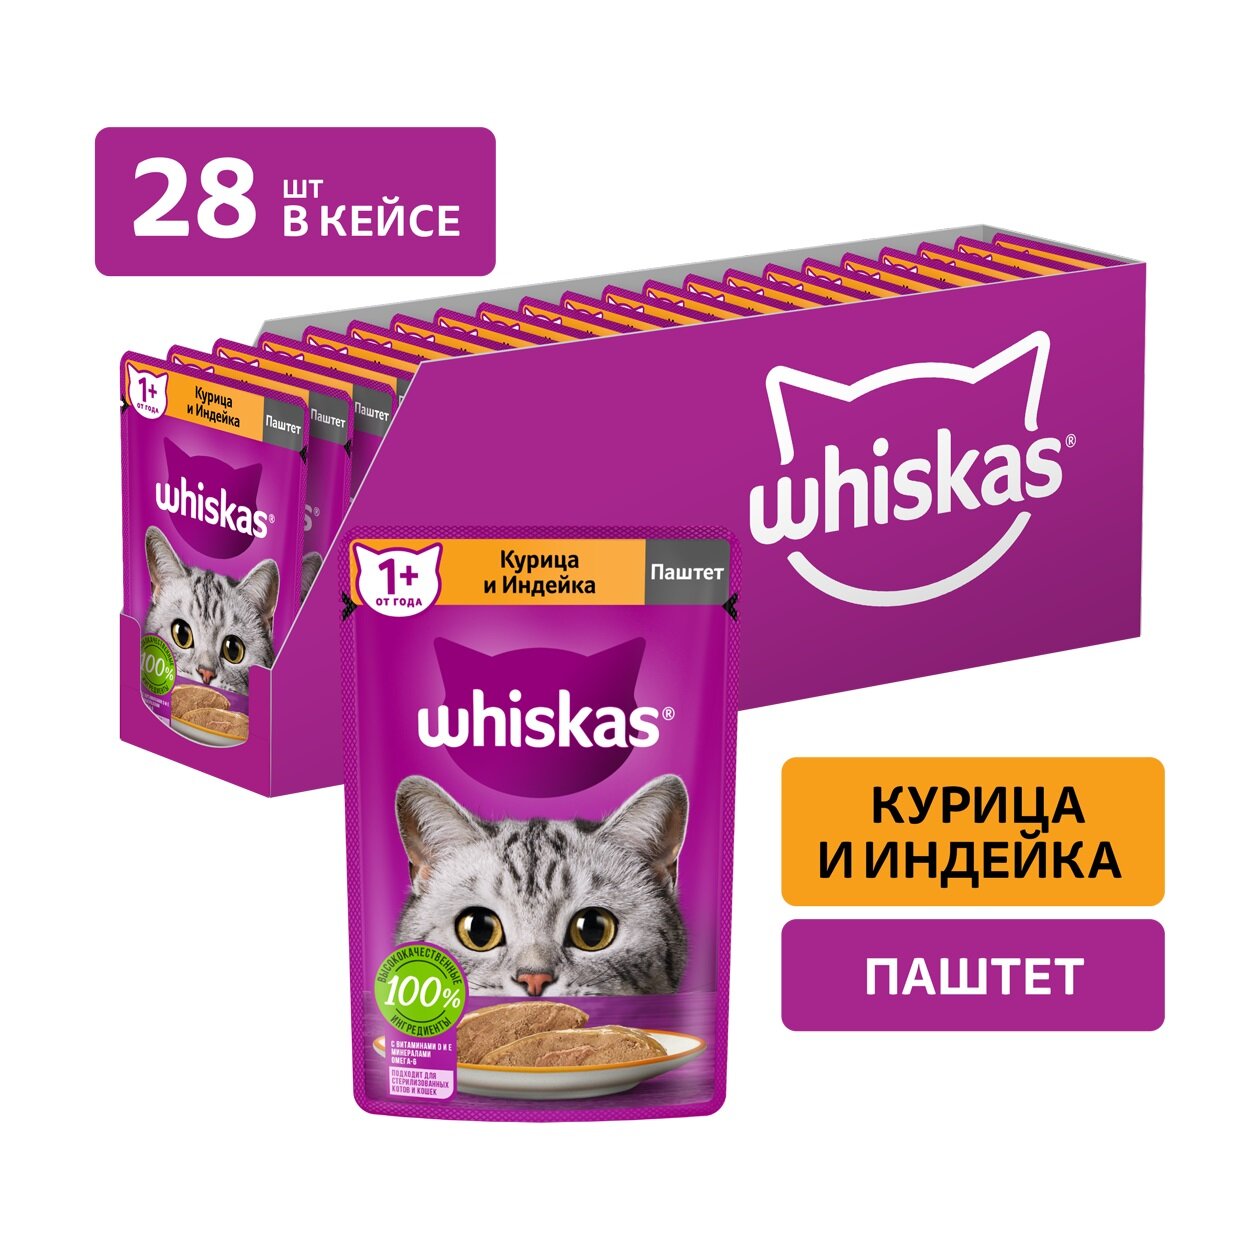 Whiskas пауч для кошек (паштет) Курица и индейка, 75 г. упаковка 28 шт